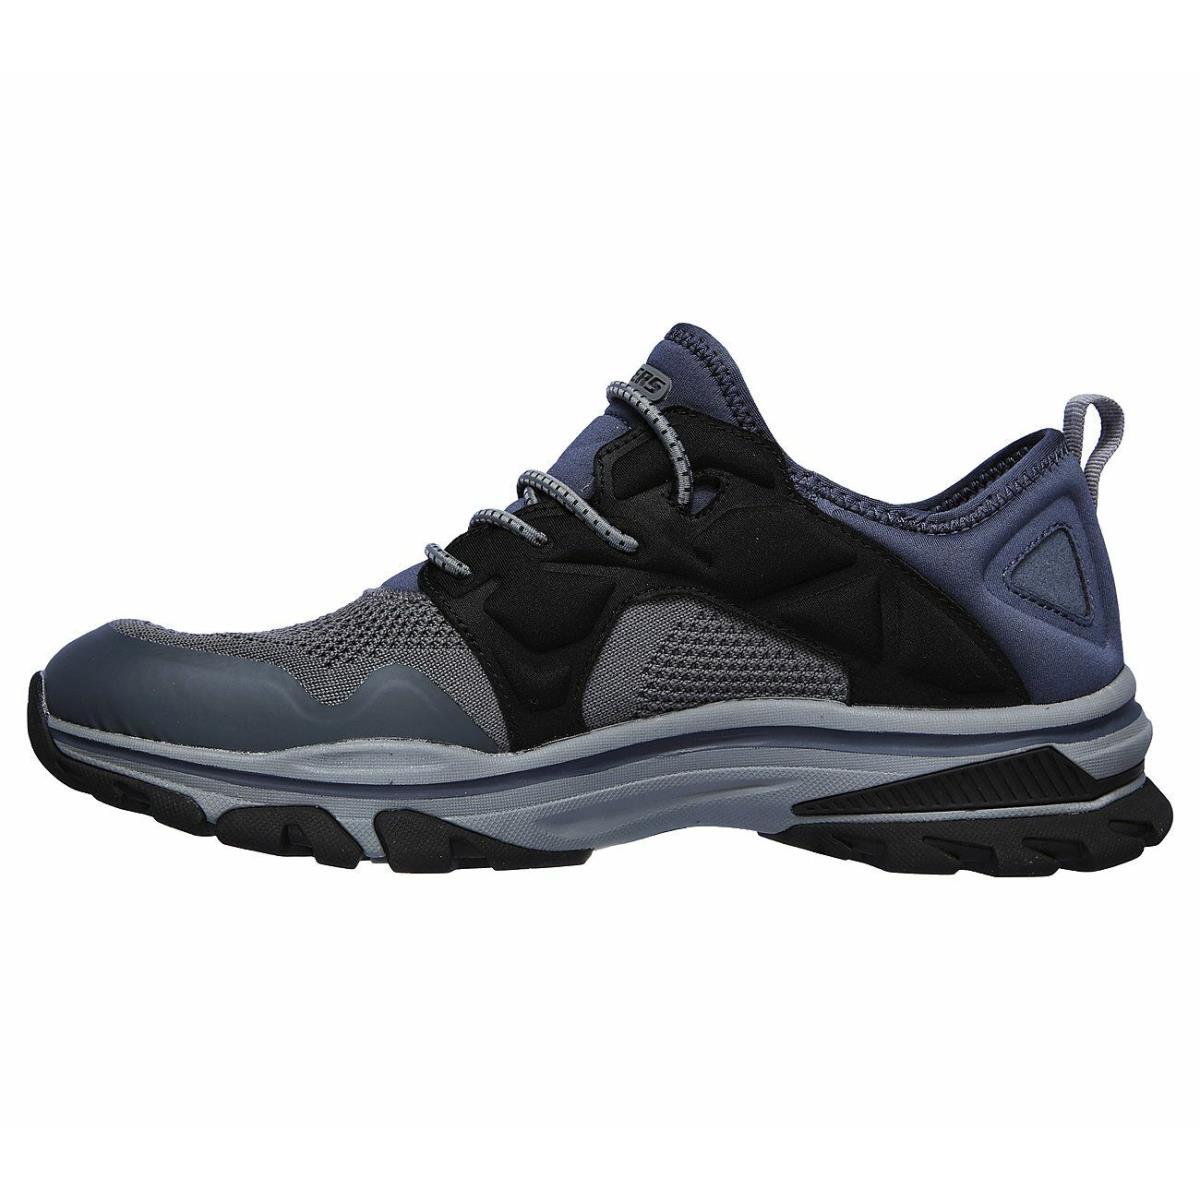 Skechers shoes Ralcon Stroman - Charcoal 2